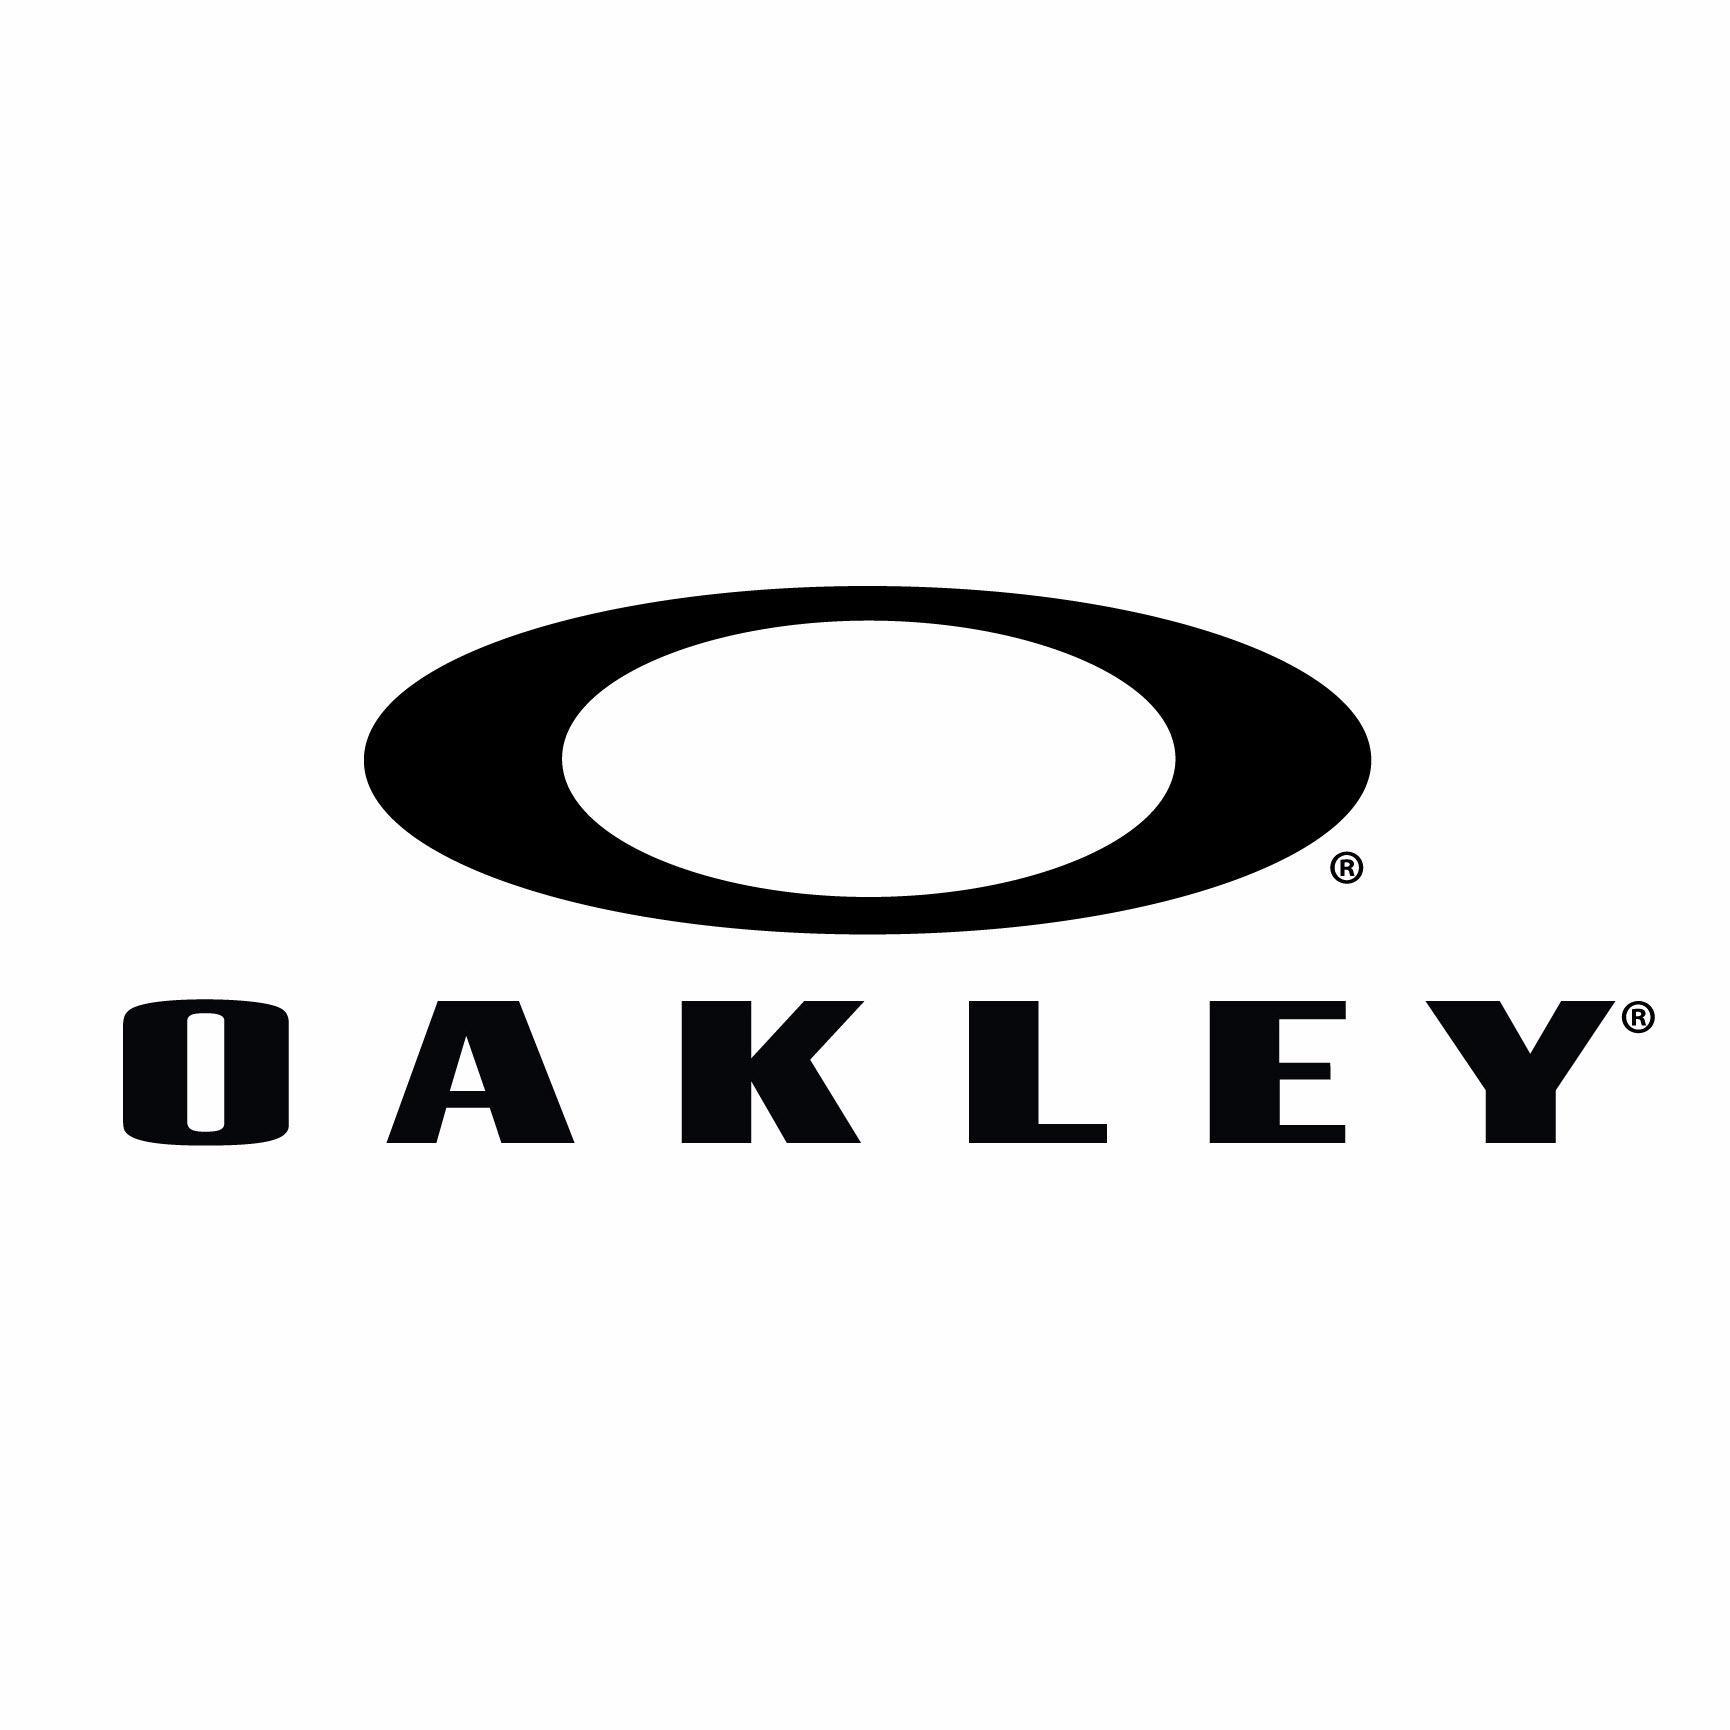 Oakley - Gatwick, West Sussex RH6 0JP - 01293 967464 | ShowMeLocal.com